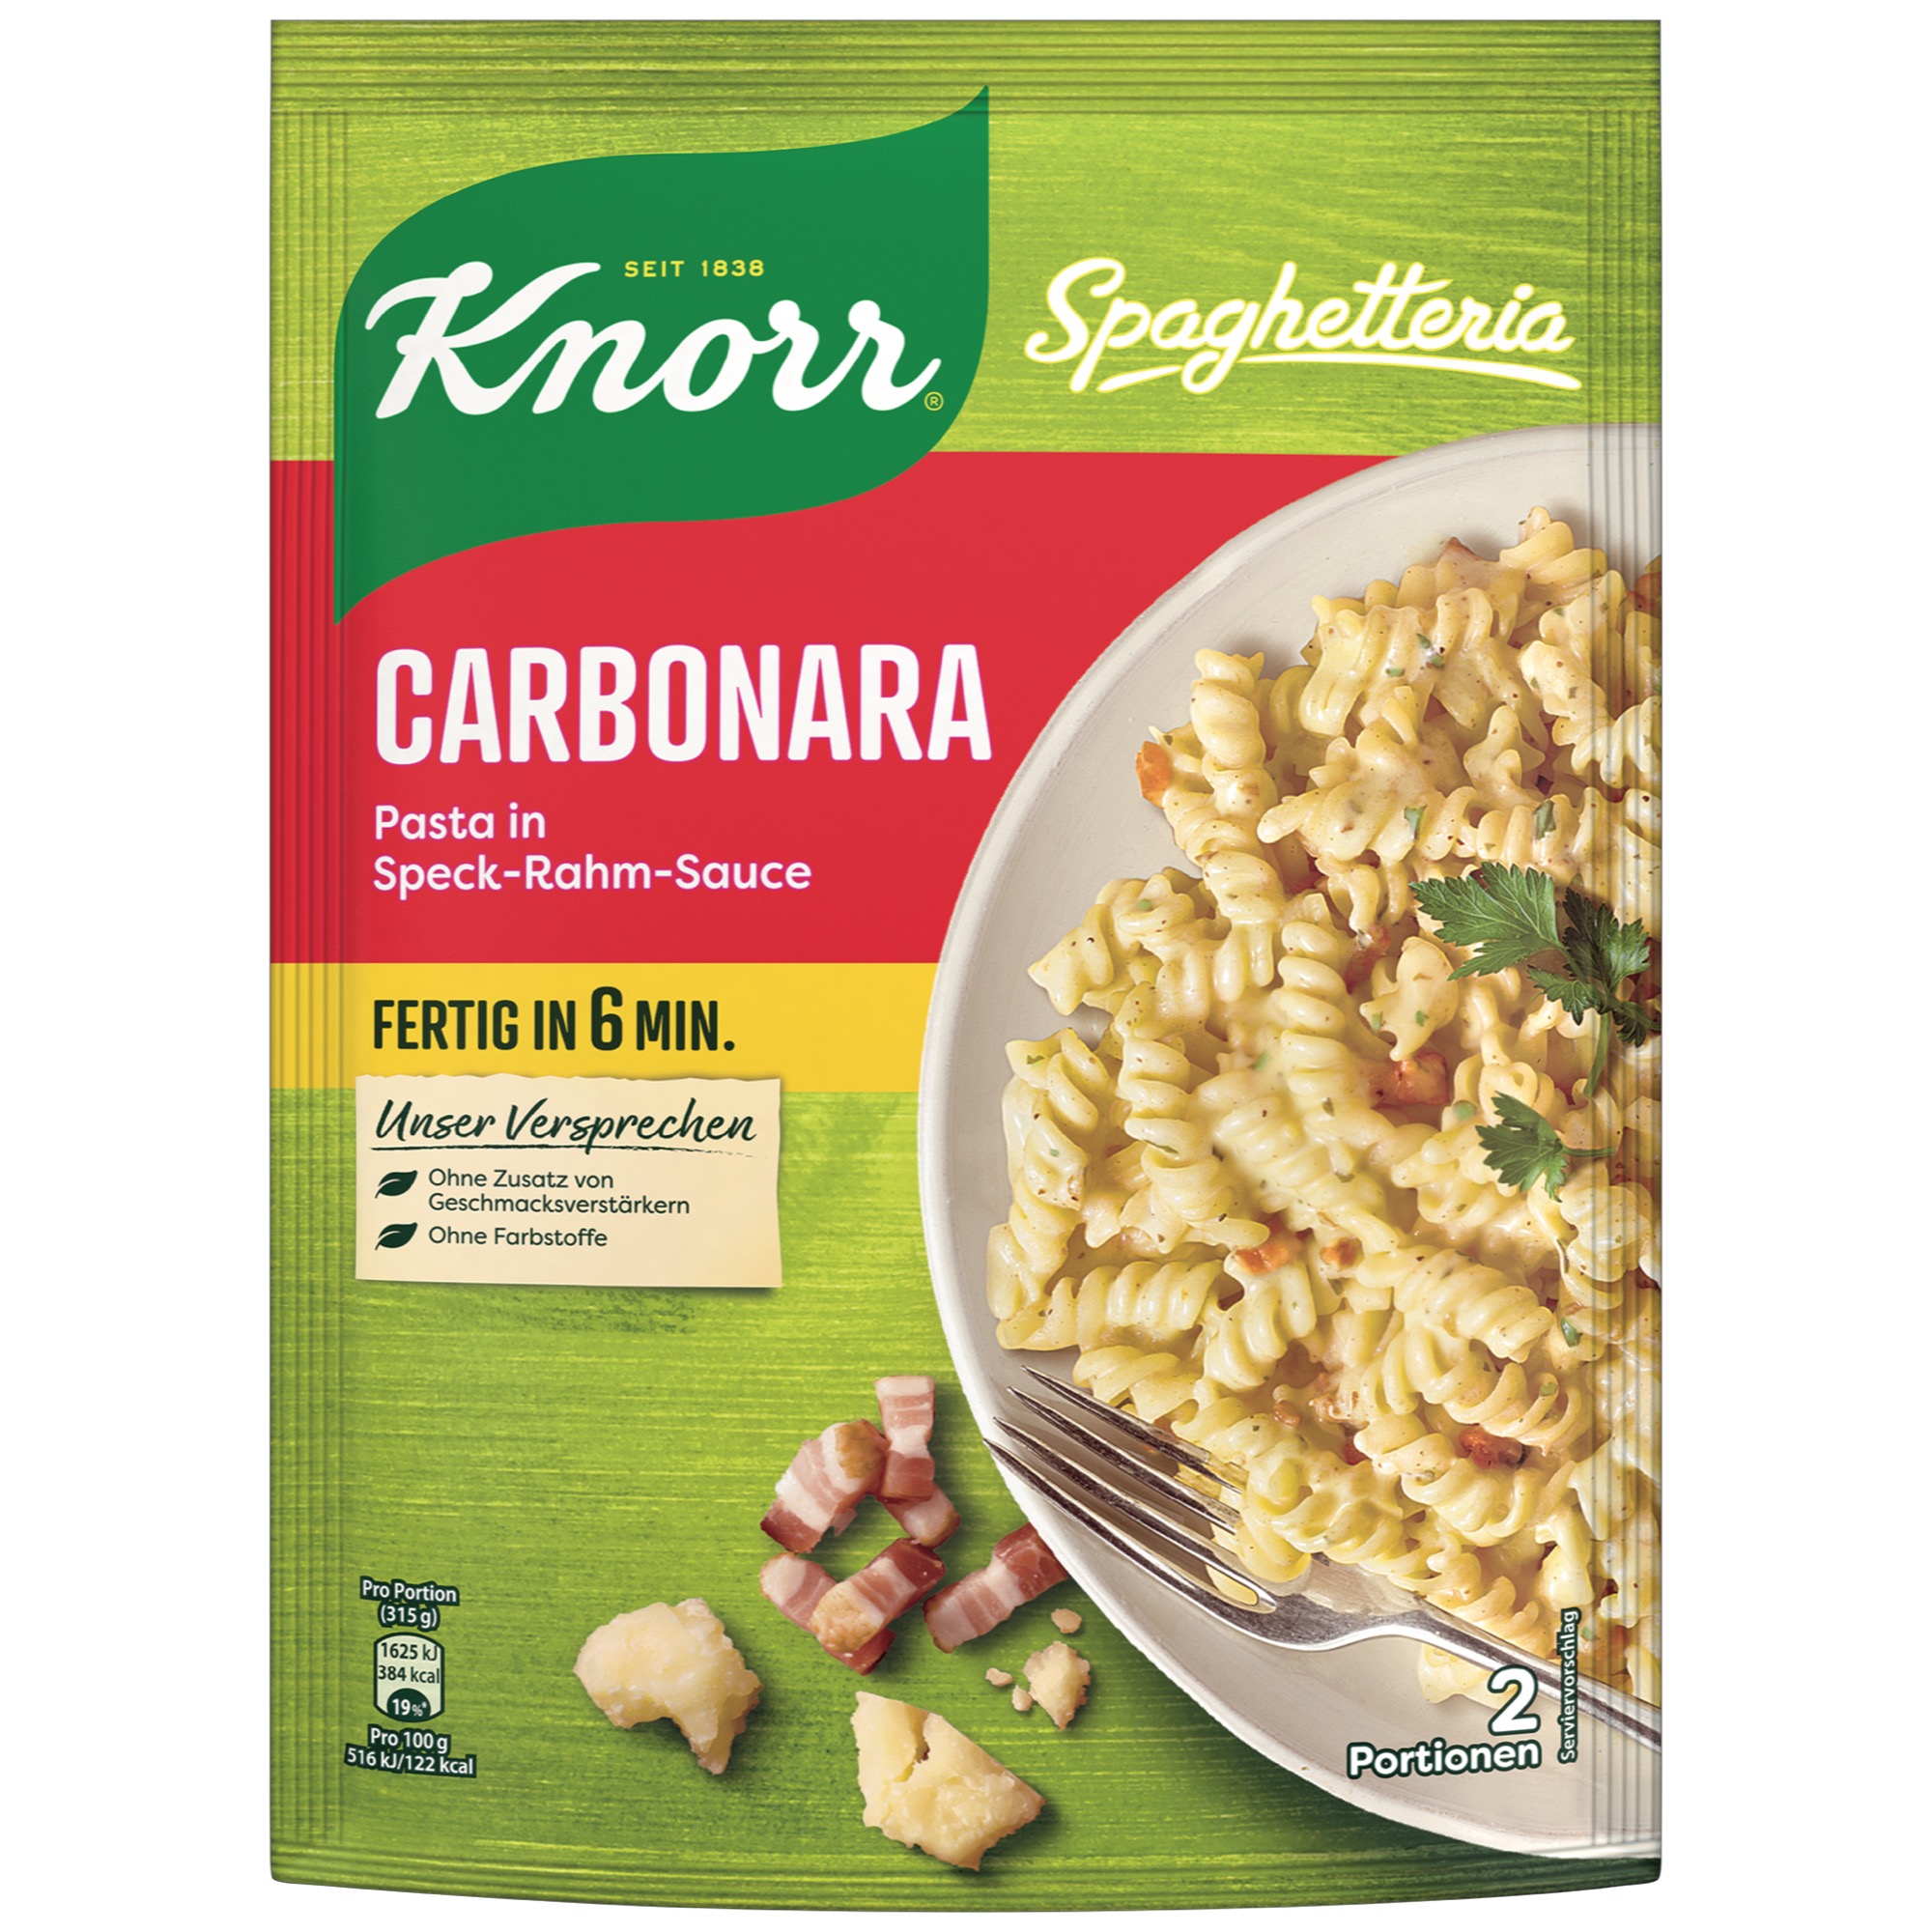 Knorr Spaghetteria, Carbonara